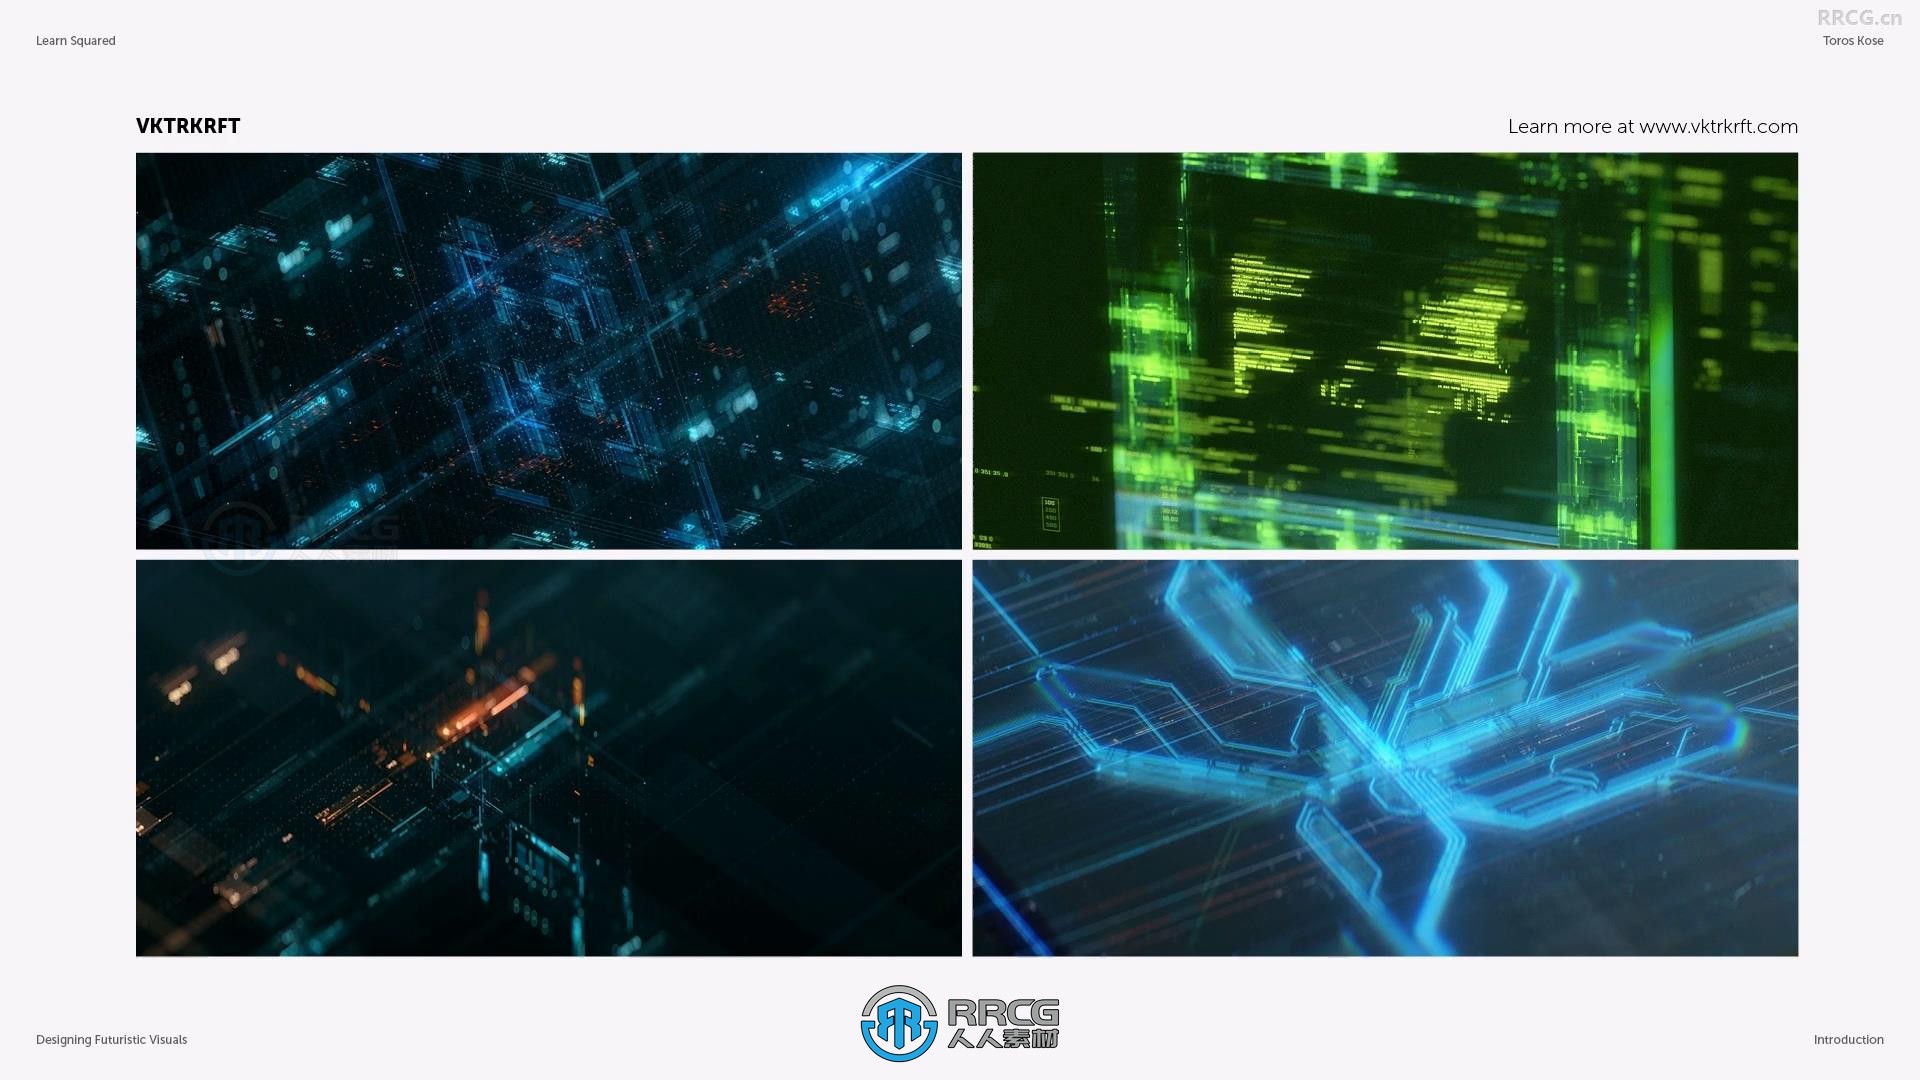 AE与AI未来派抽象概念艺术视效动画制作视频教程